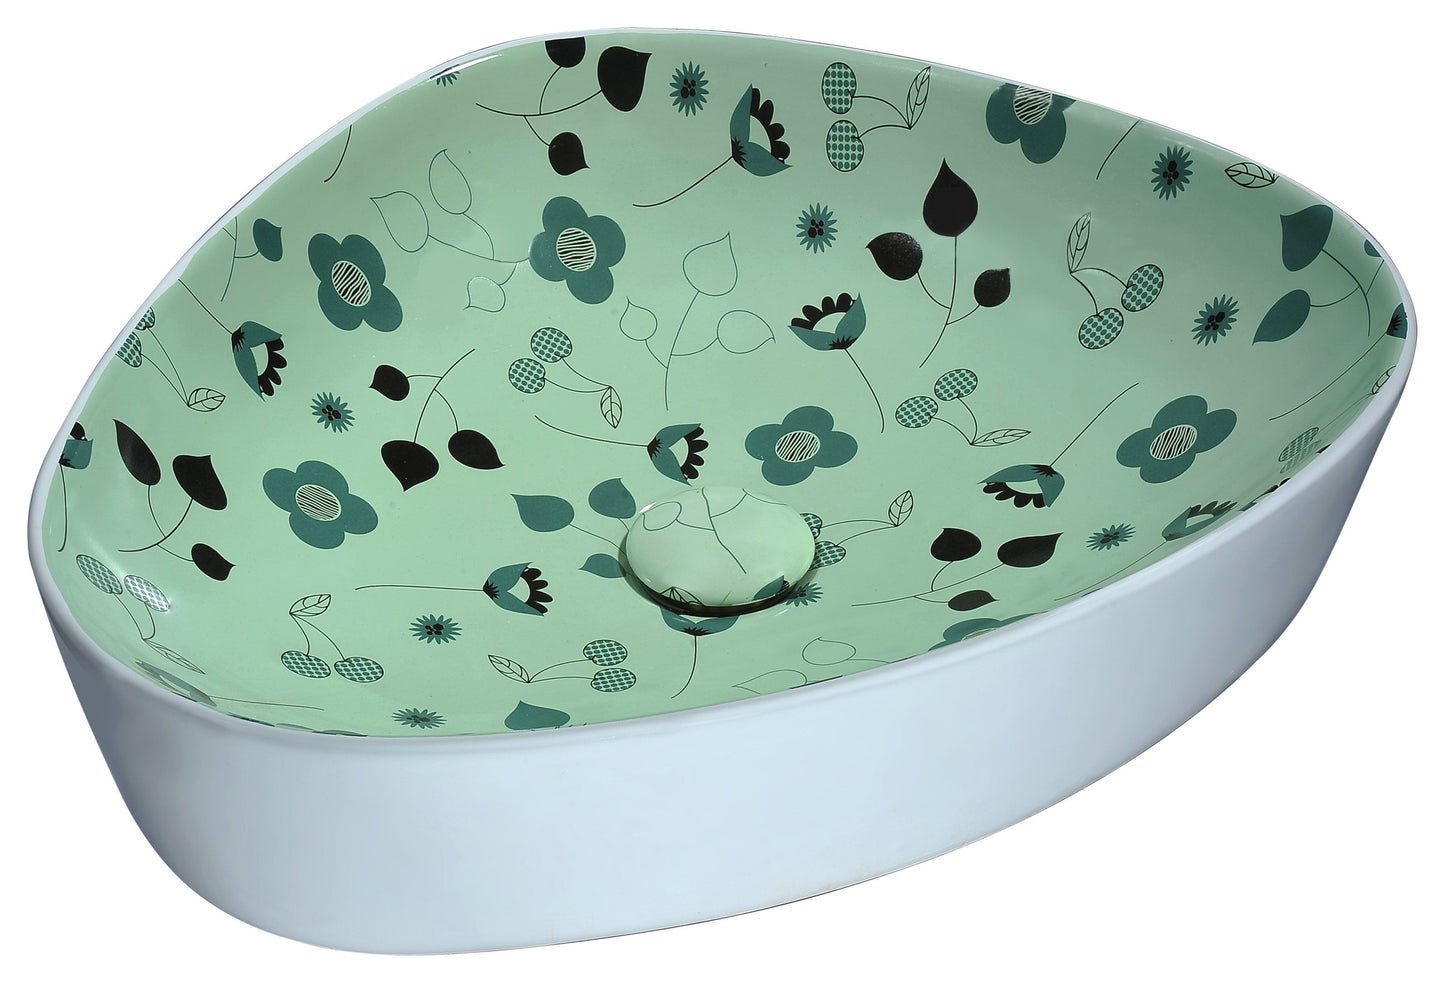 Franco Series Ceramic Vessel Sink in Mint Green - Luxe Bathroom Vanities